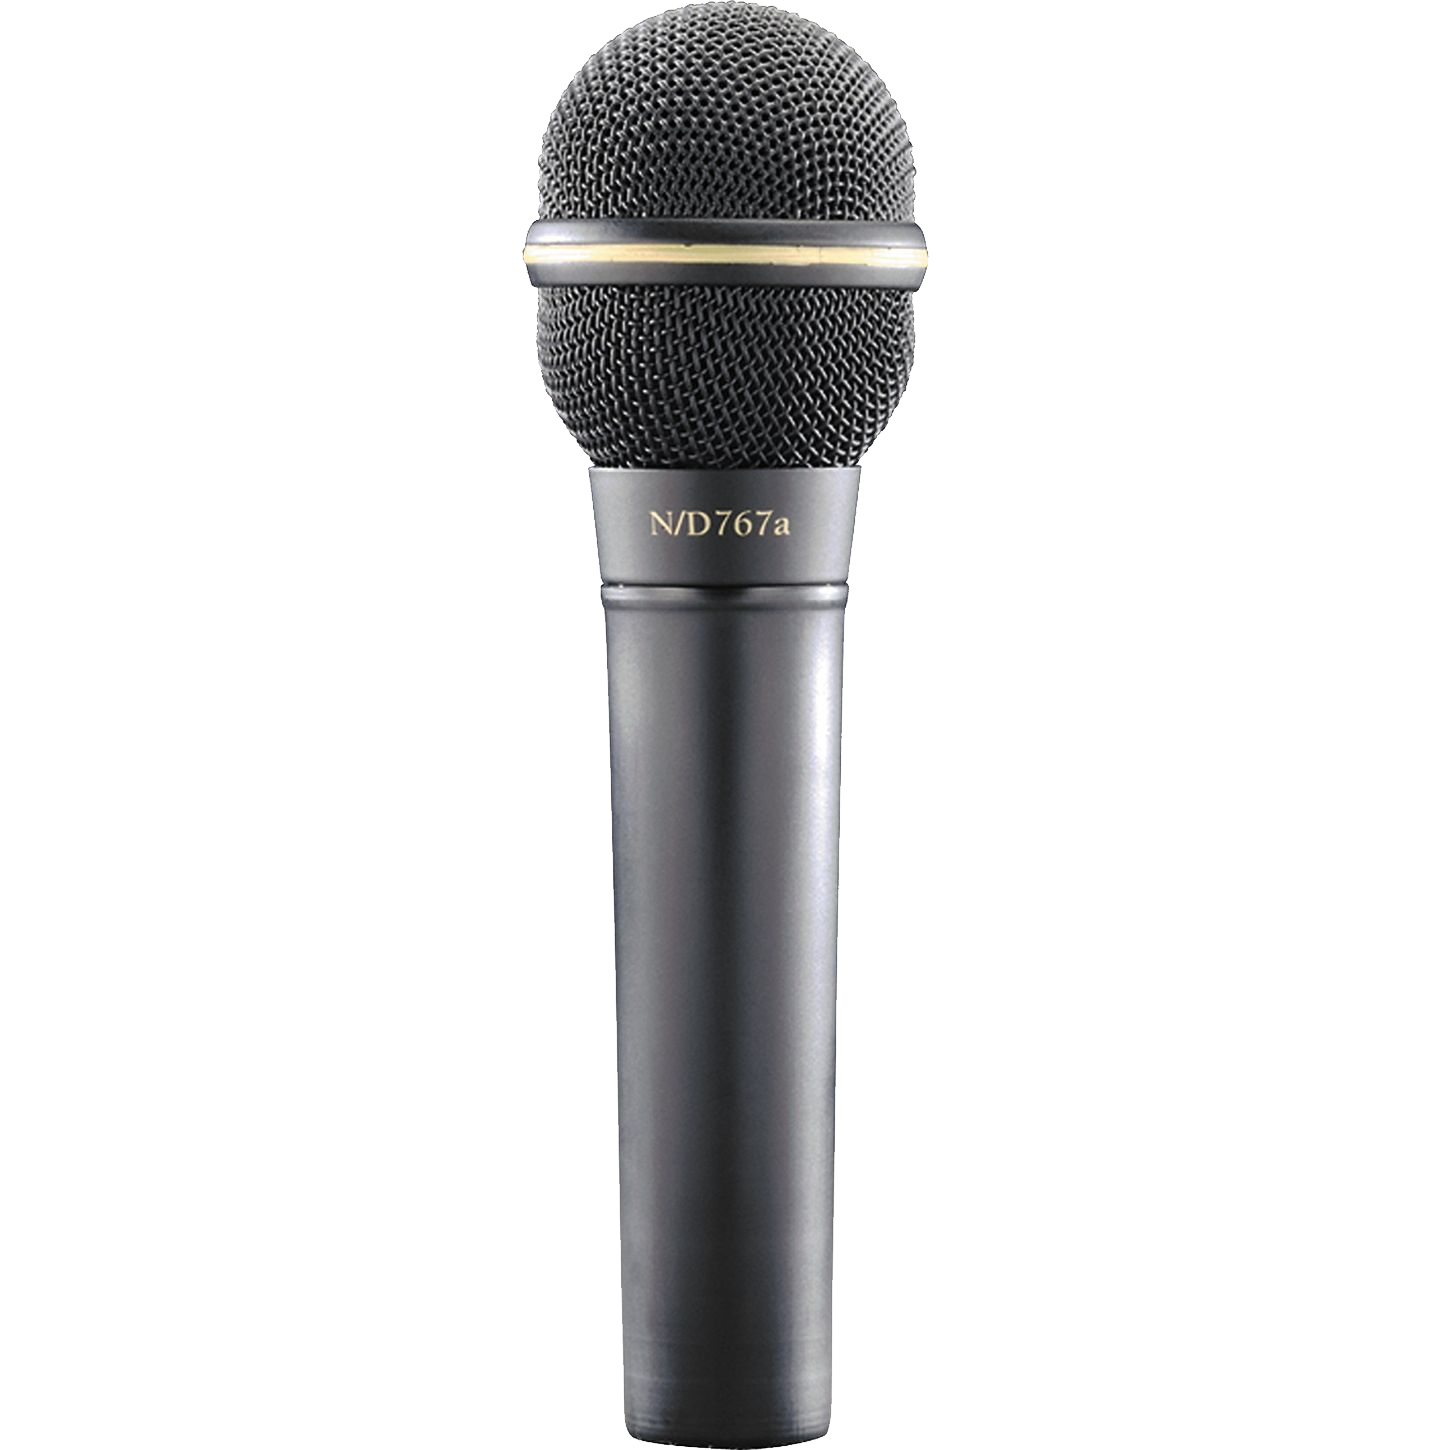 Microfone